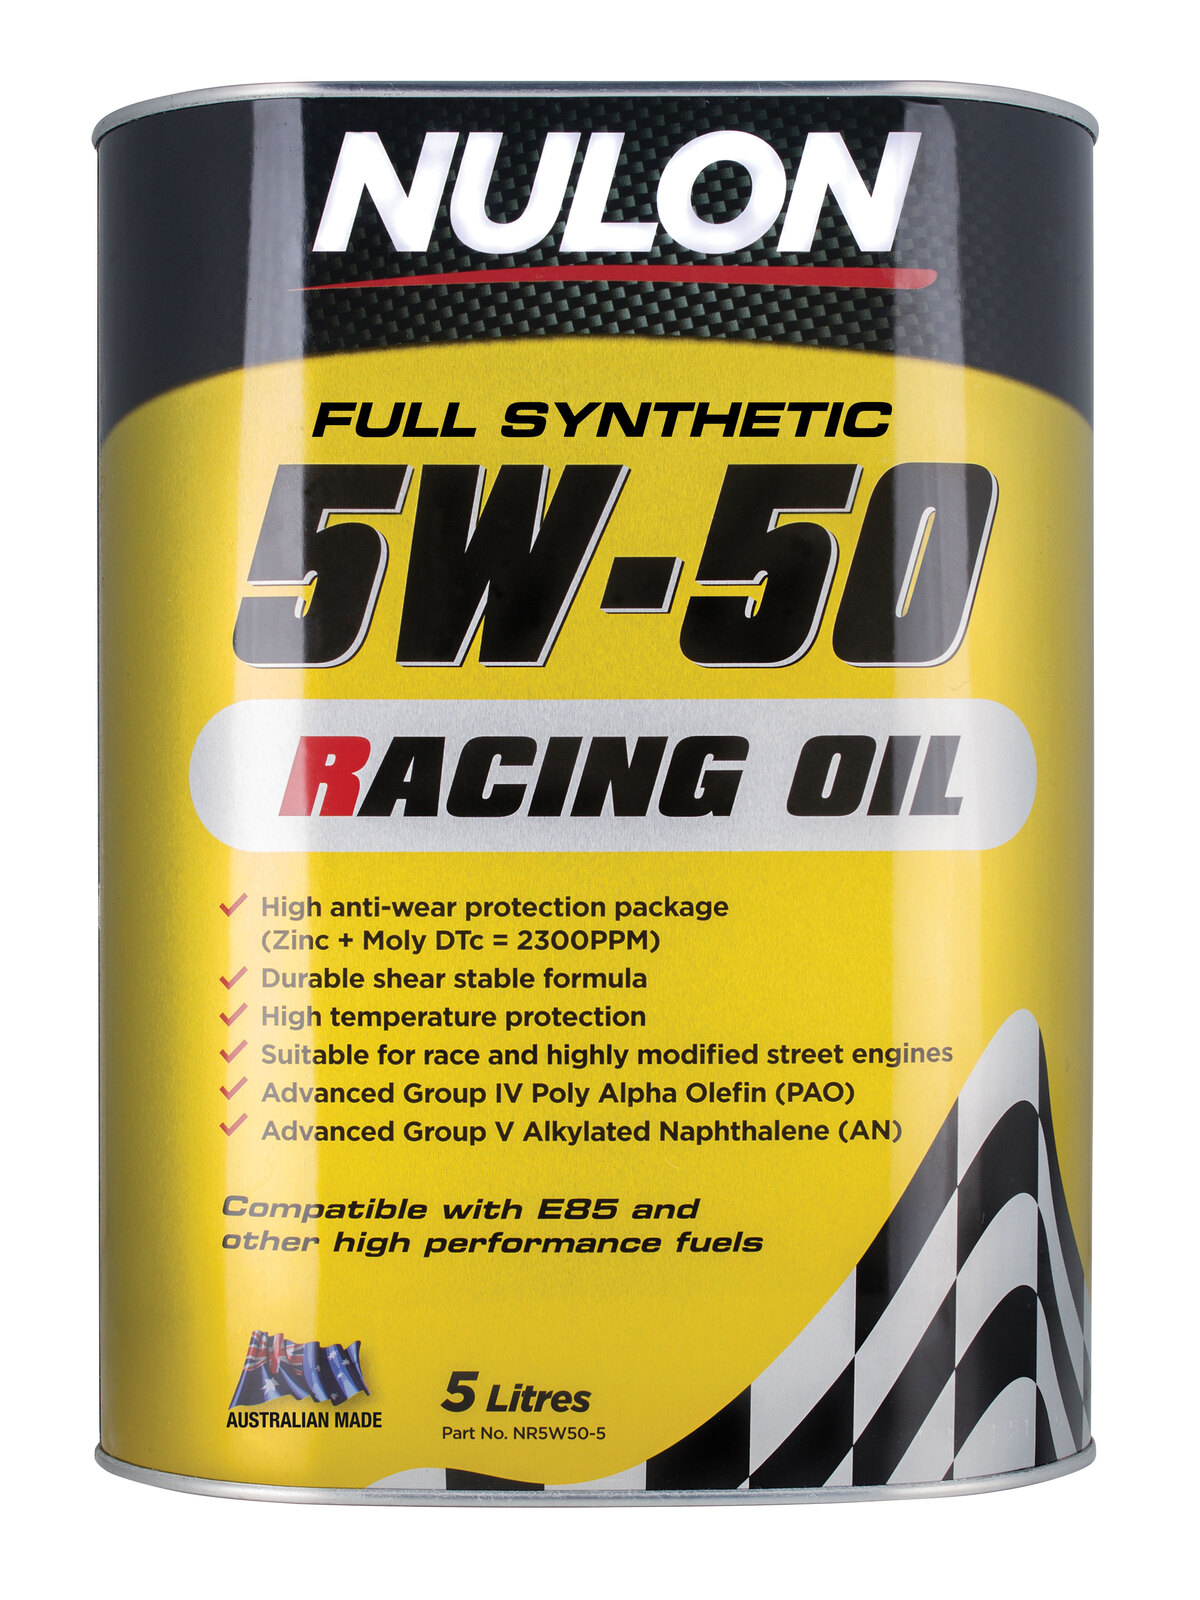 NULON Full Synthetic 5W-50 Racing Oil, Each